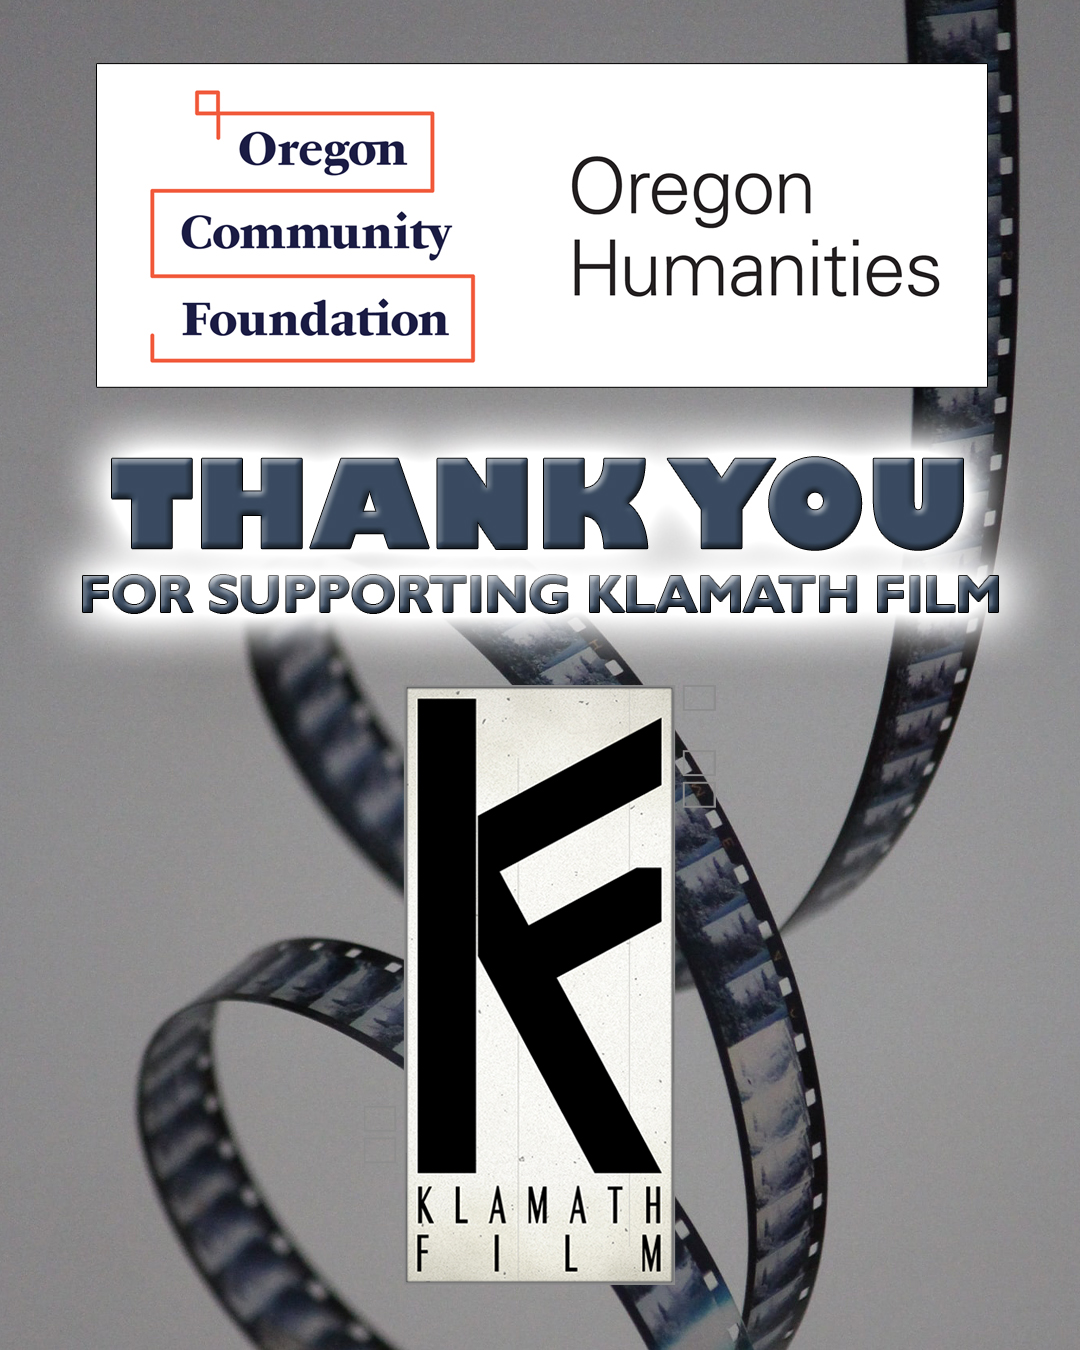 Klamath Film receives COVID-19 emergency funding